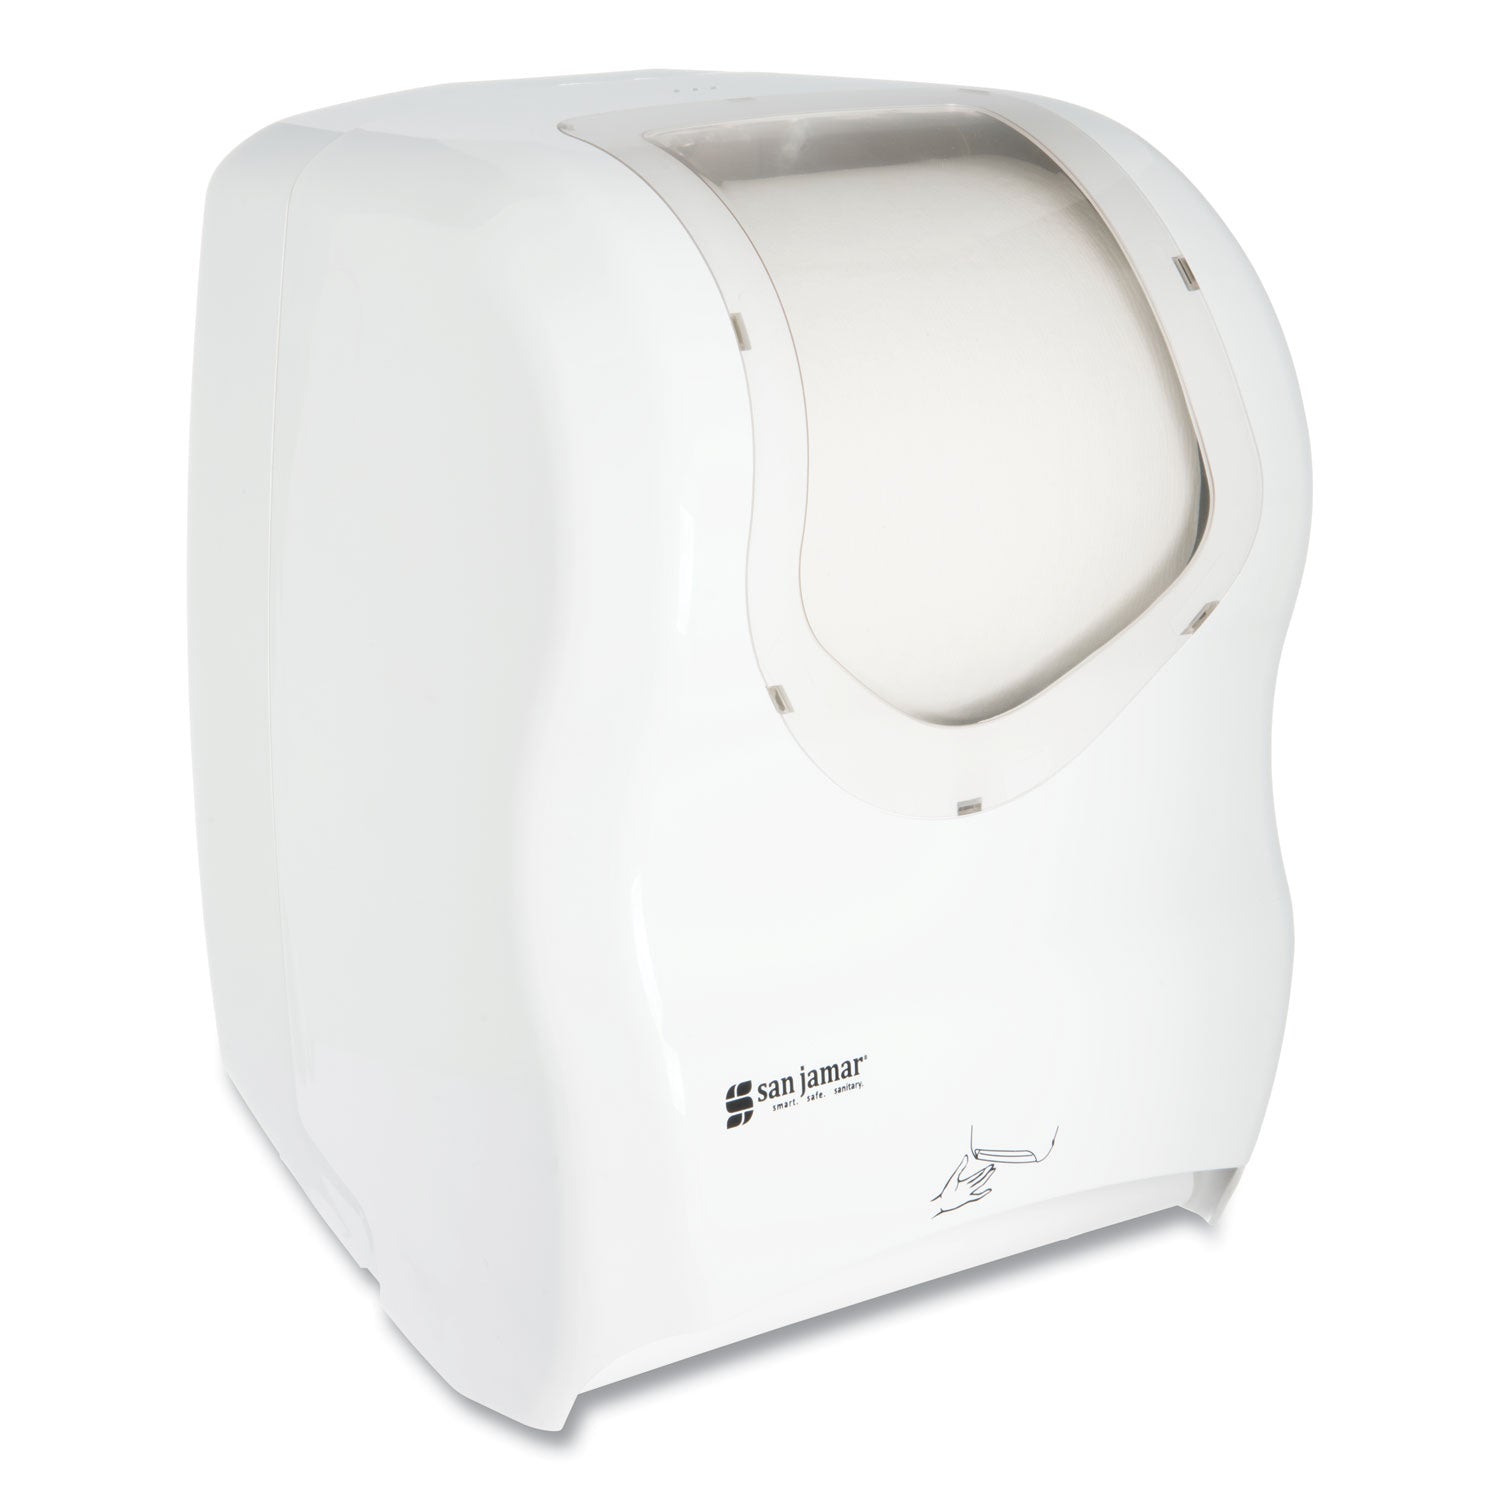 smart-system-with-iq-sensor-towel-dispenser-165-x-975-x-12-white-clear_sjmt1470whcl - 3